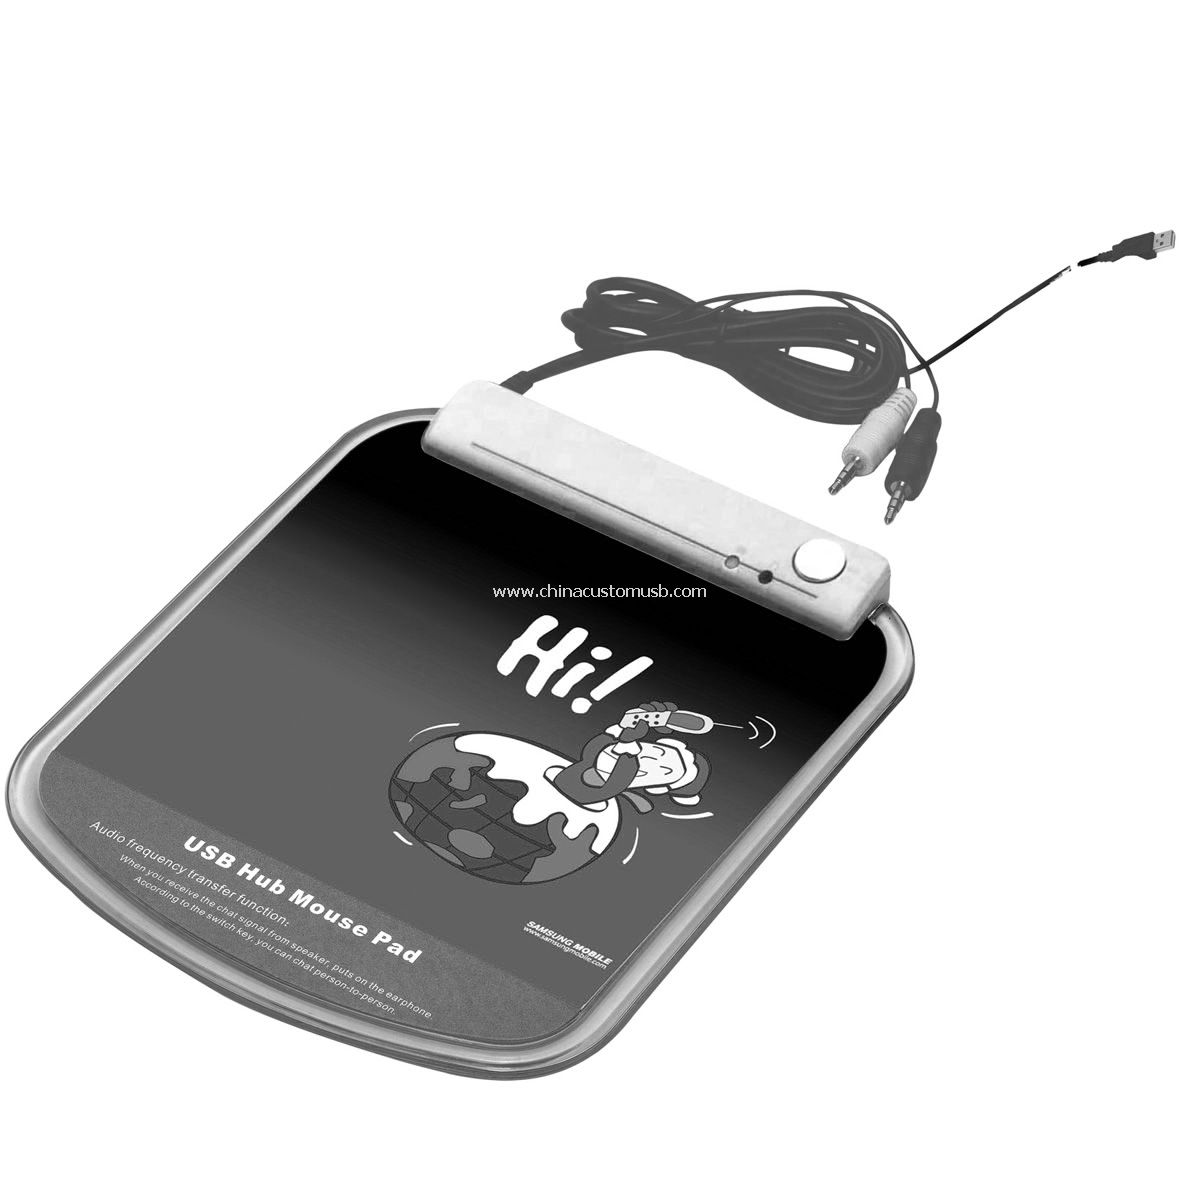 USB hub mouse pads